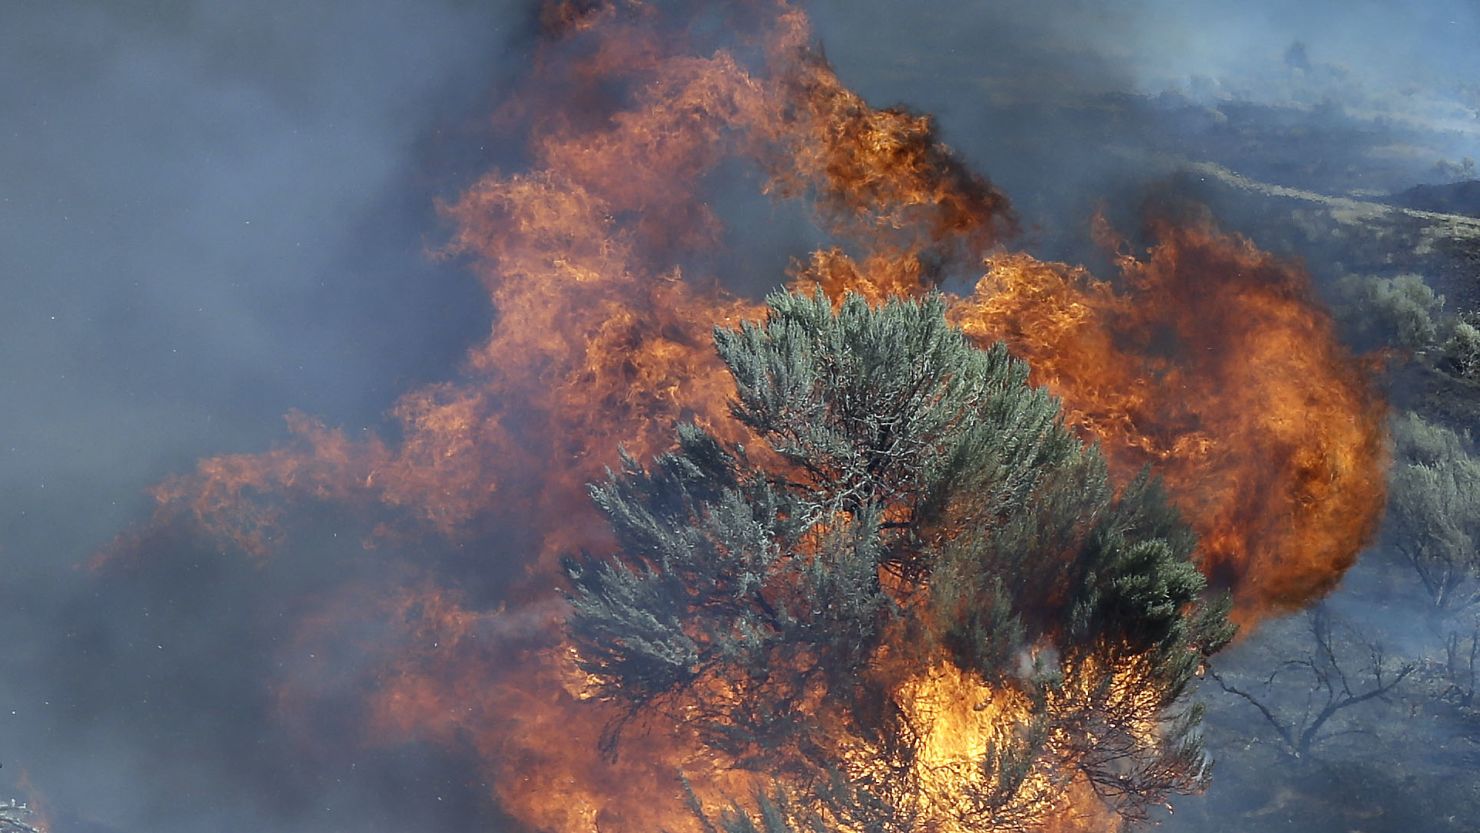 Fire engulfs a juniper tree near Roosevelt, Washington, on Wednesday.